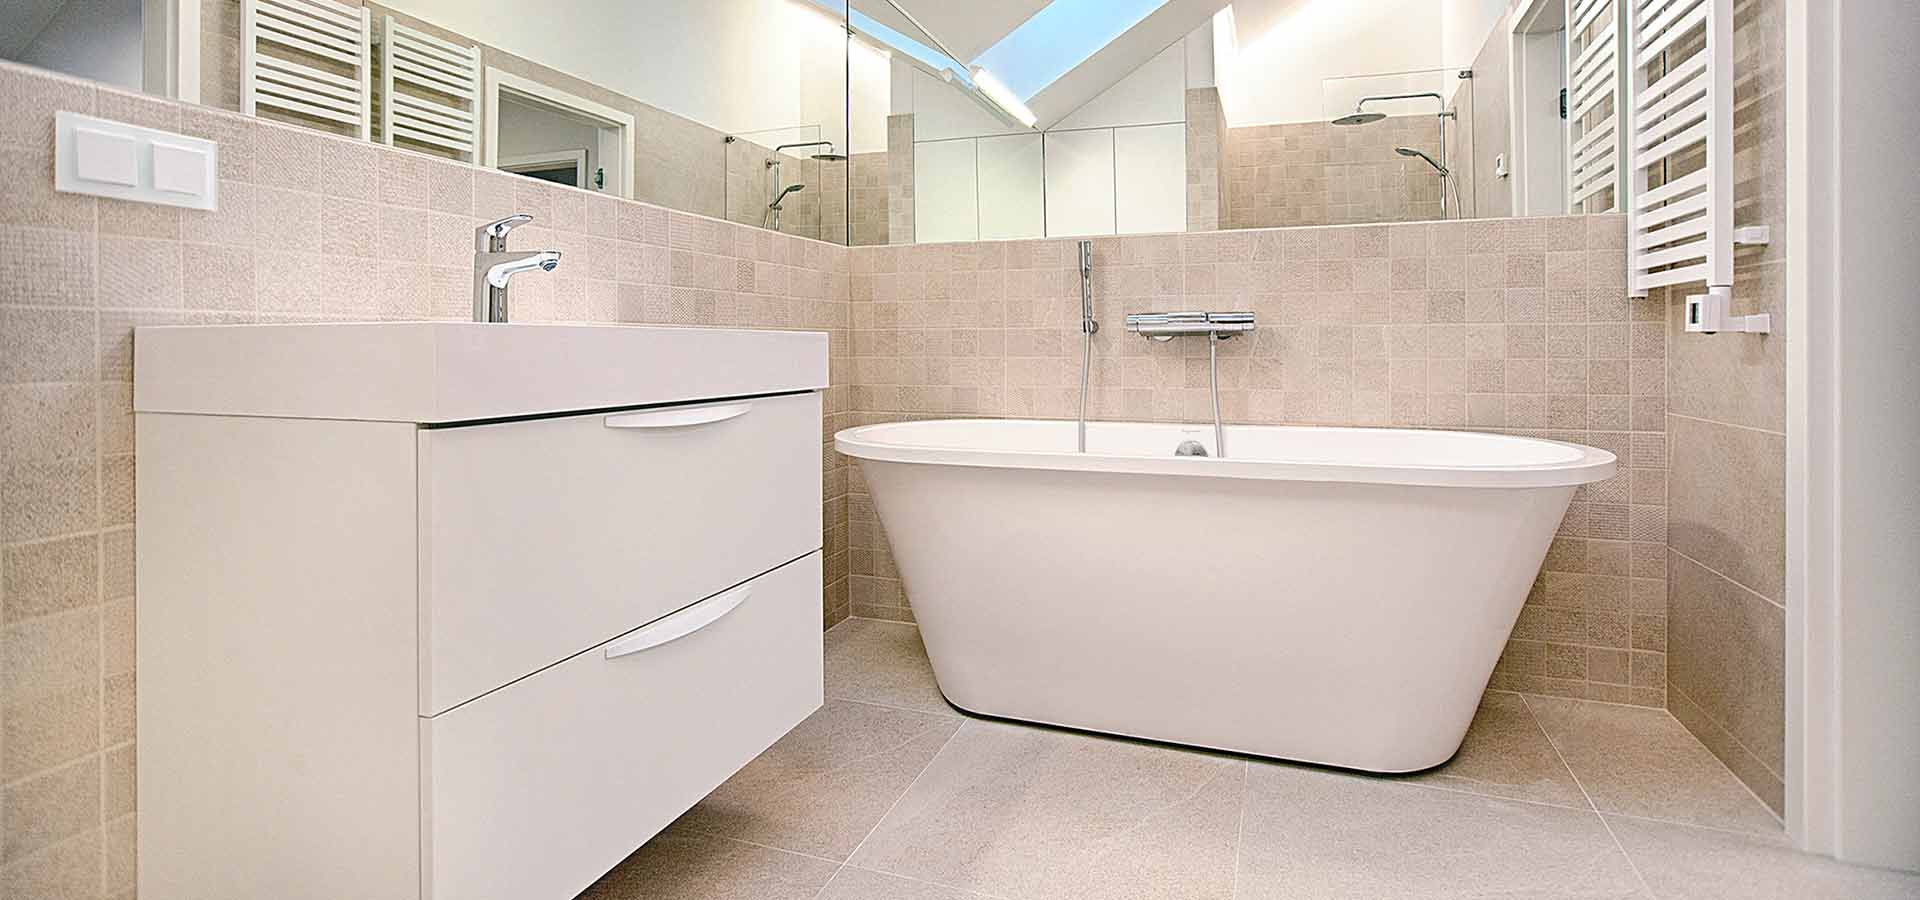 Photo of typical bathroom by Midfield Plumbers Ltd